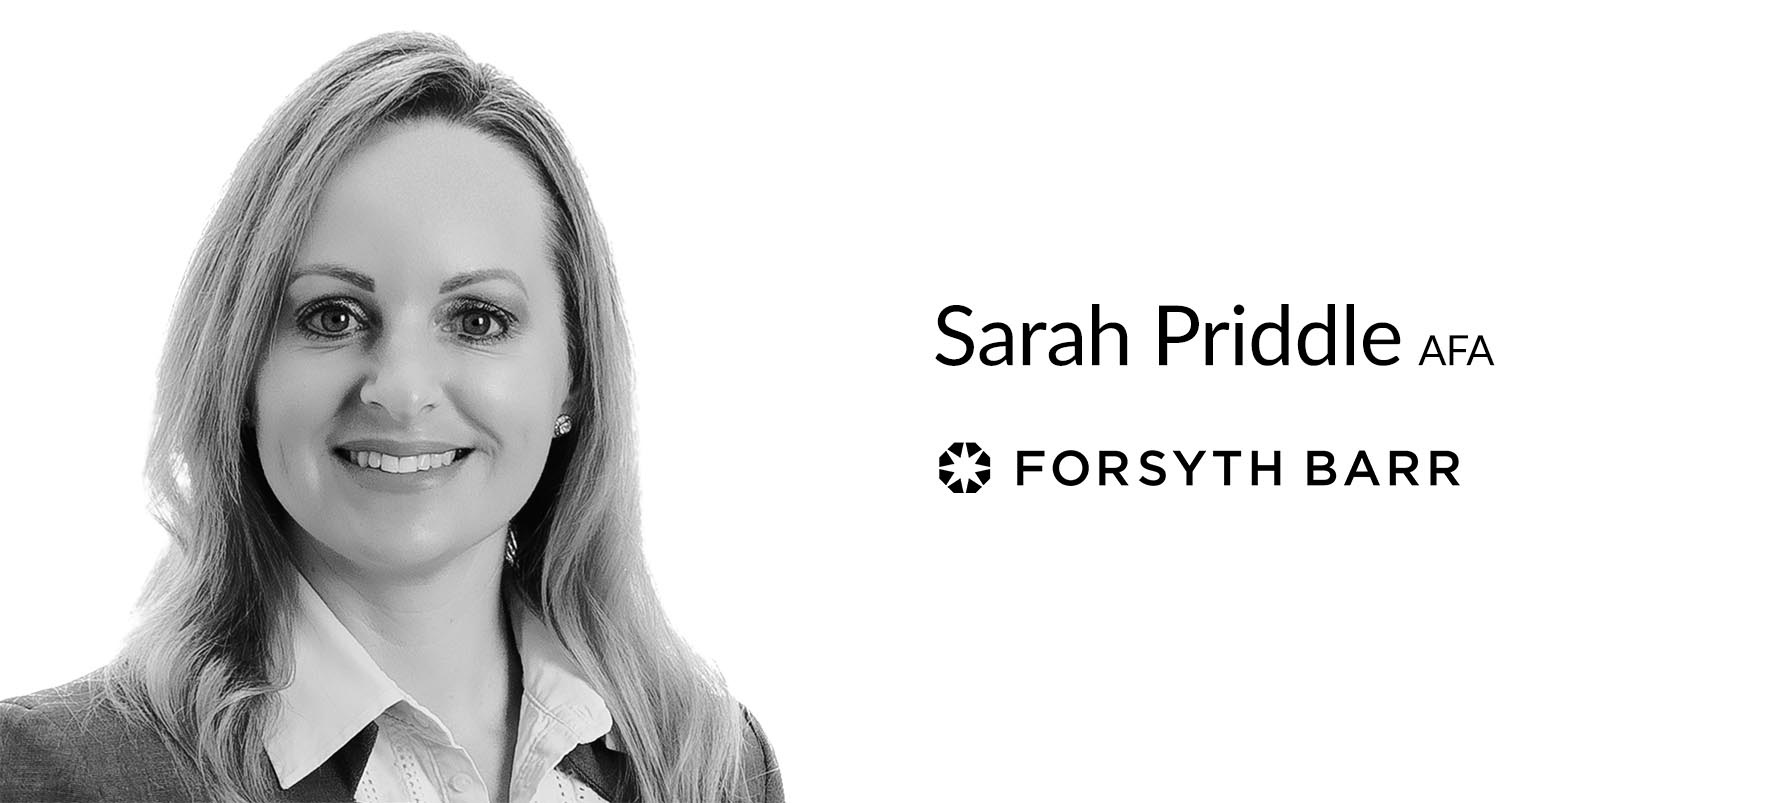 Forsyth Barr introduces Sarah Priddle